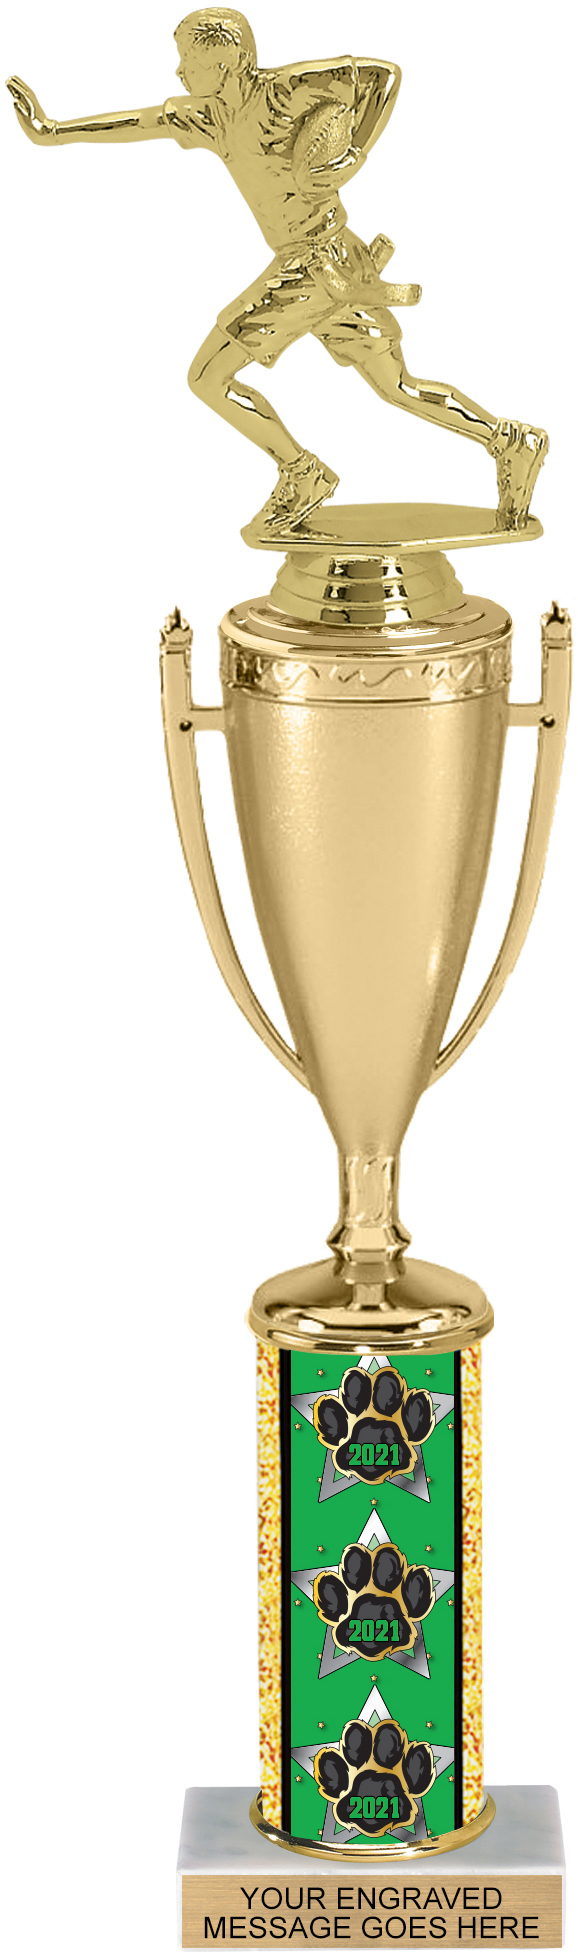 15 inch Paw Year Column Cup Trophy